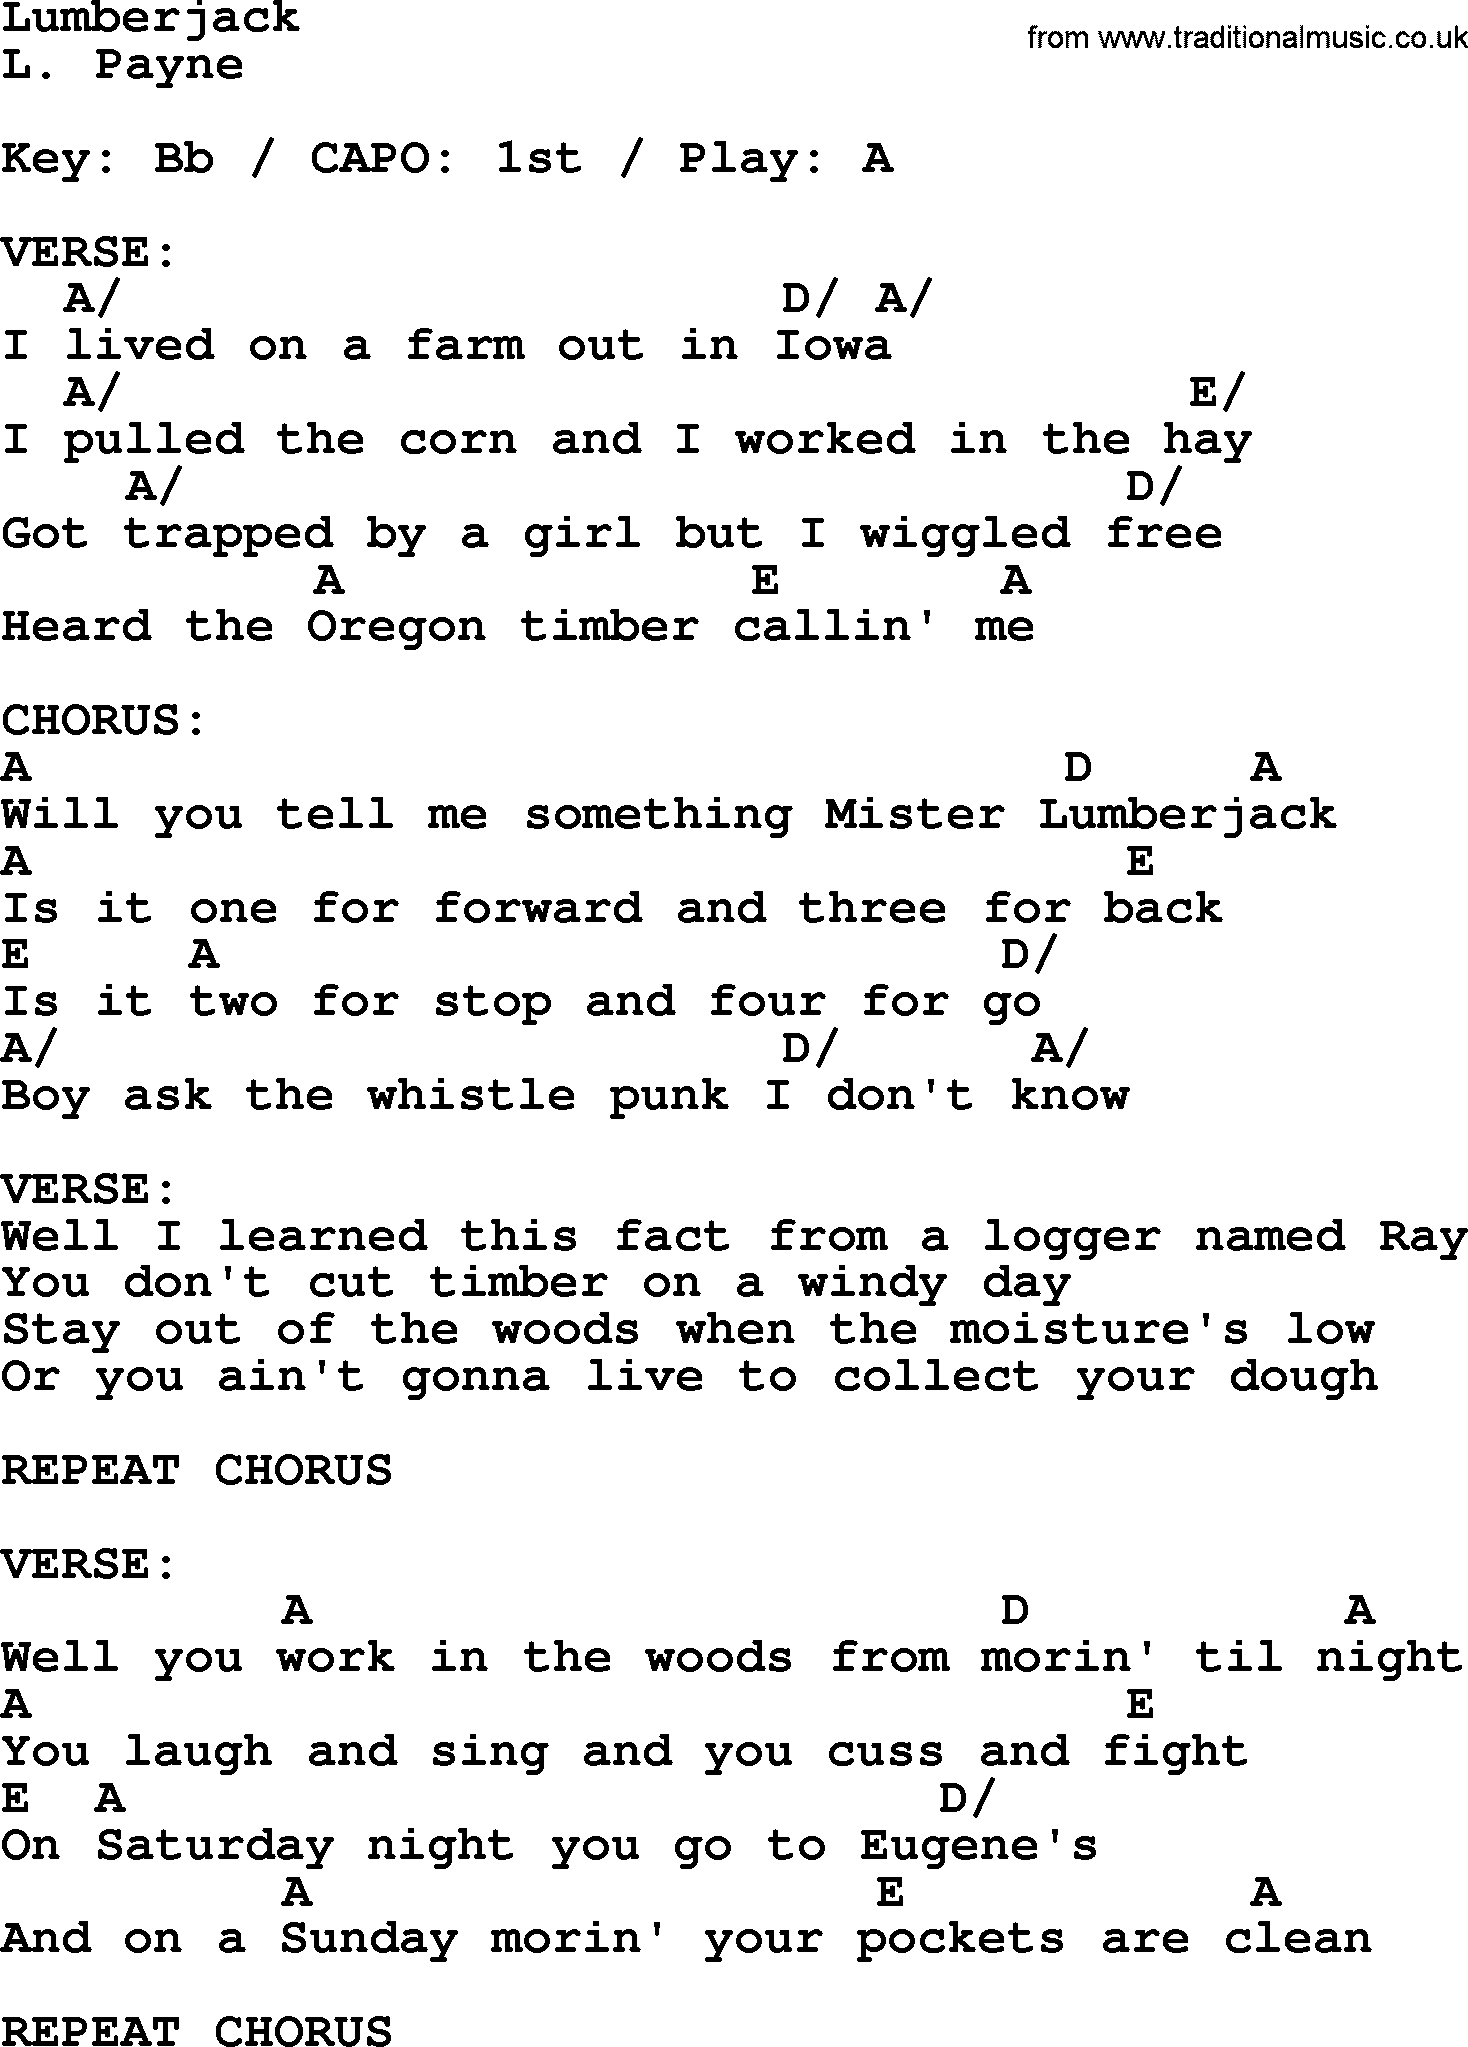 Johnny Cash song Lumberjack, lyrics and chords